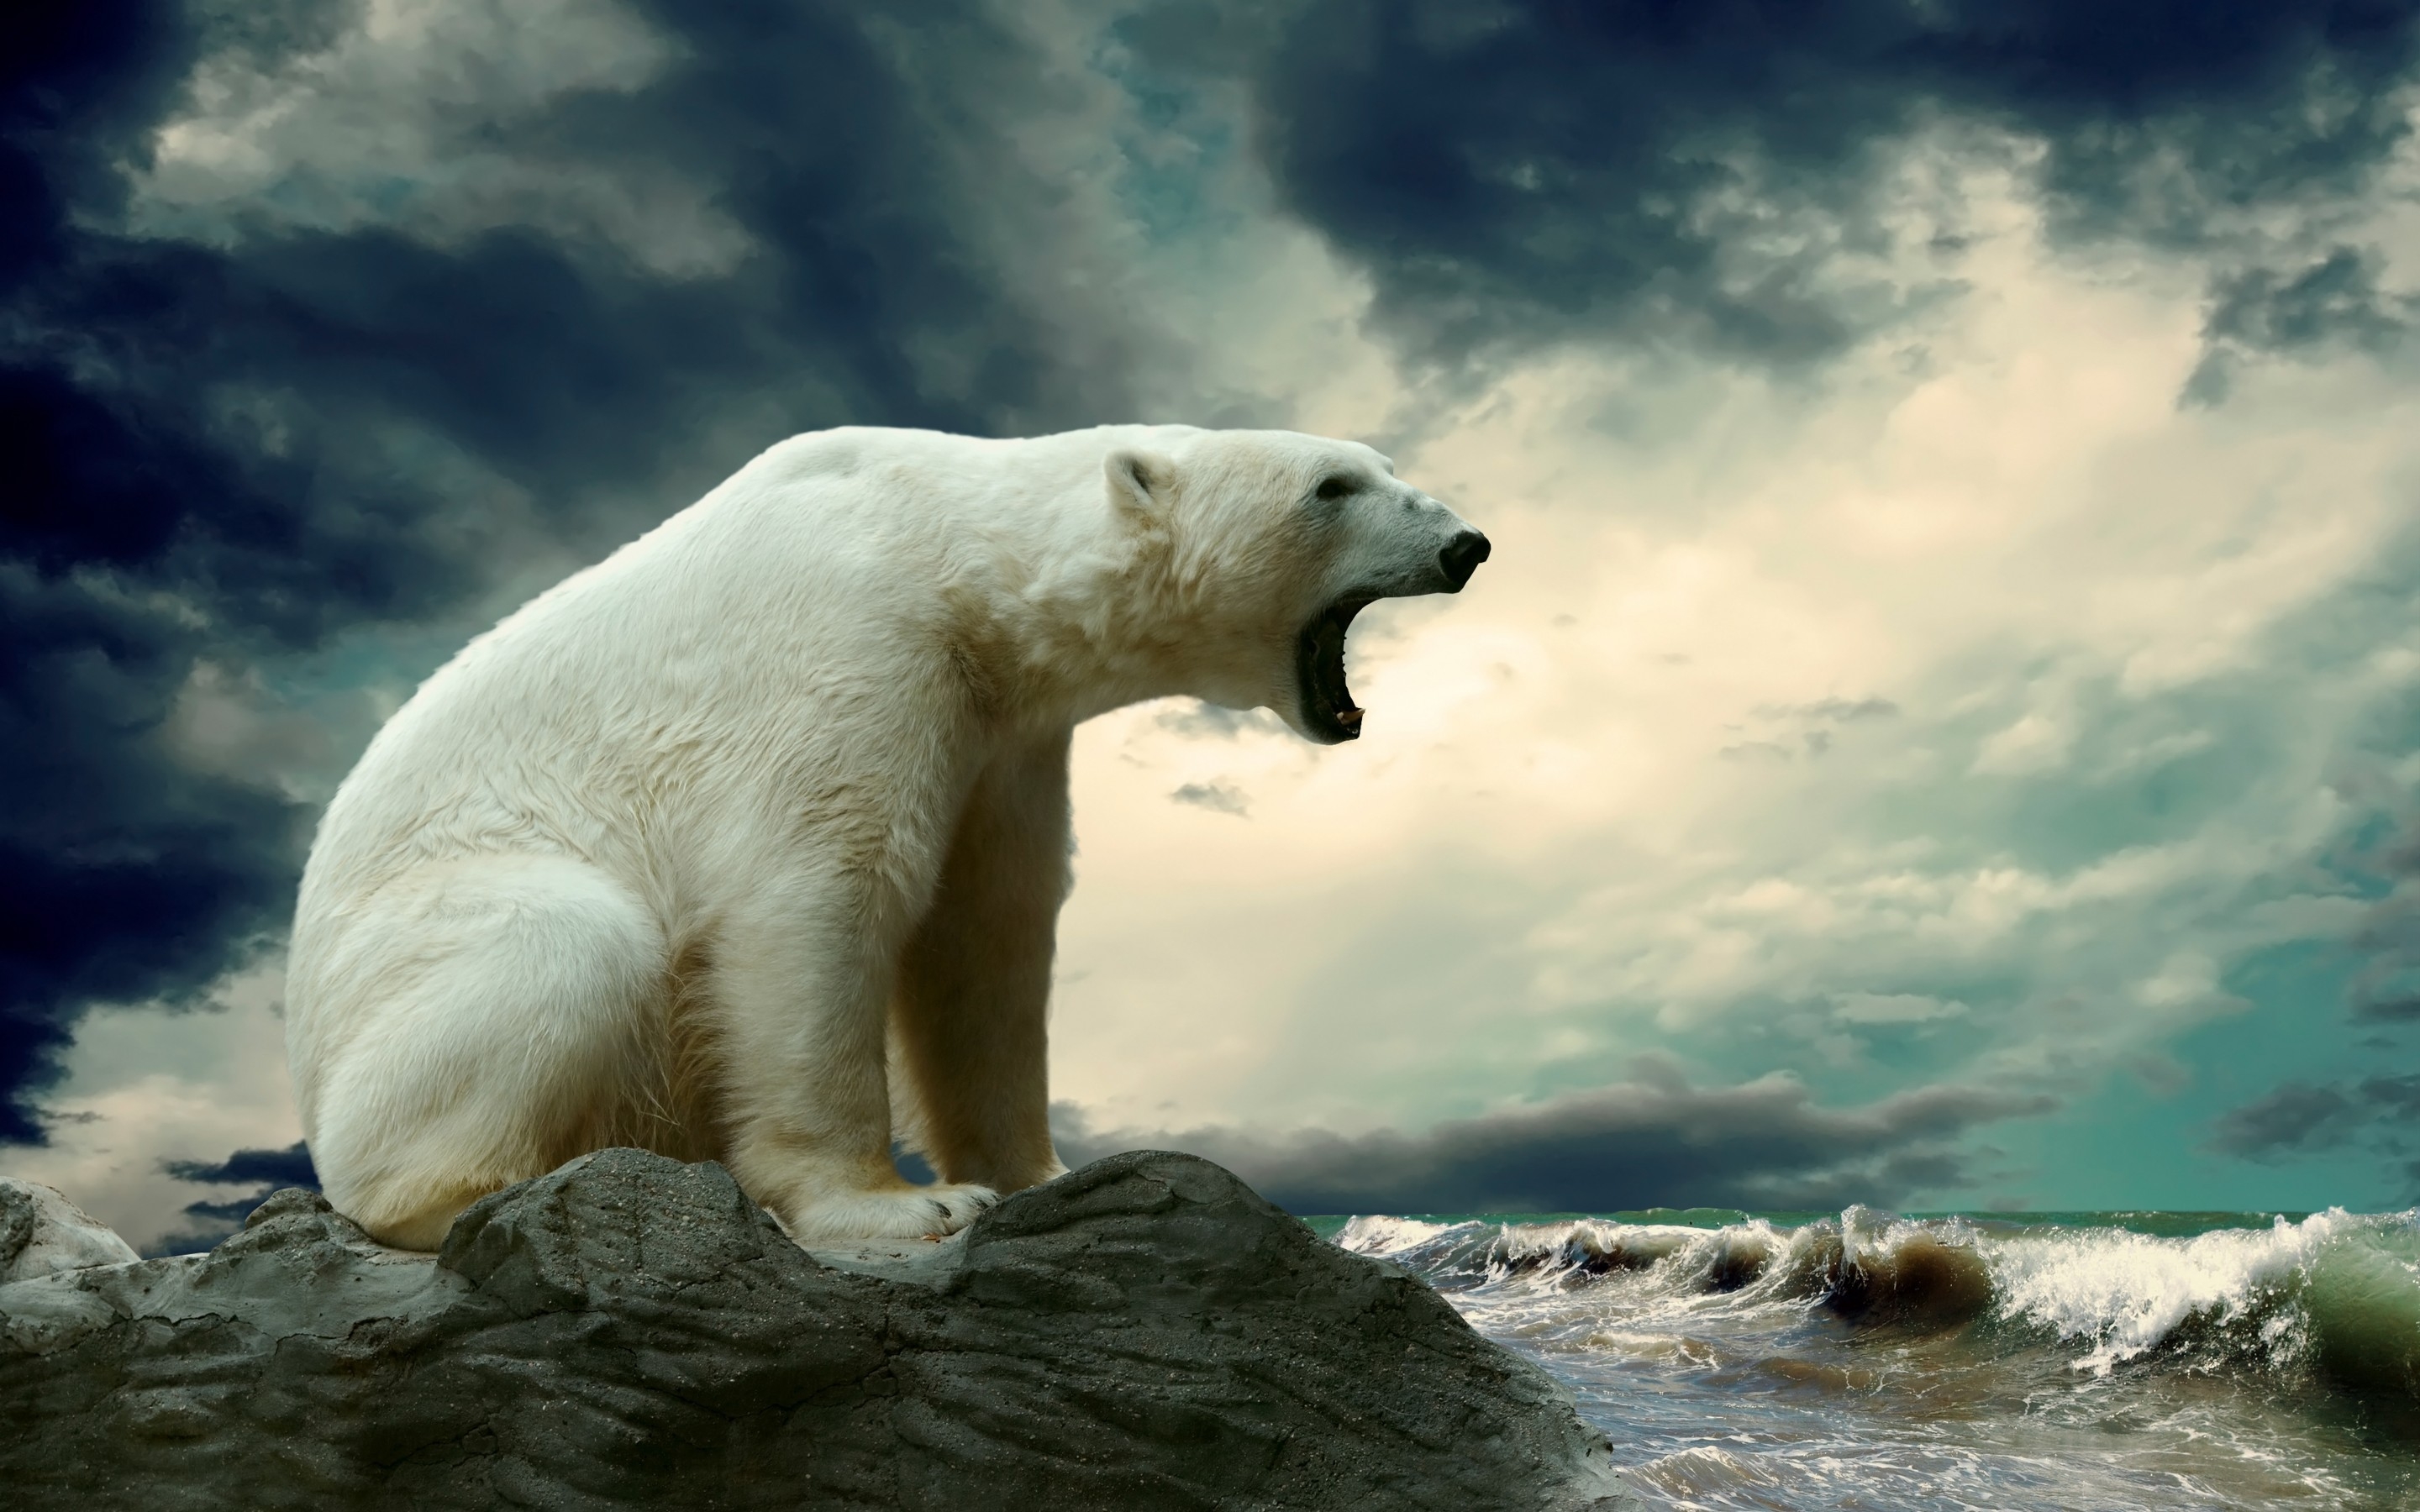 Polar Bear Shouting for 2880 x 1800 Retina Display resolution